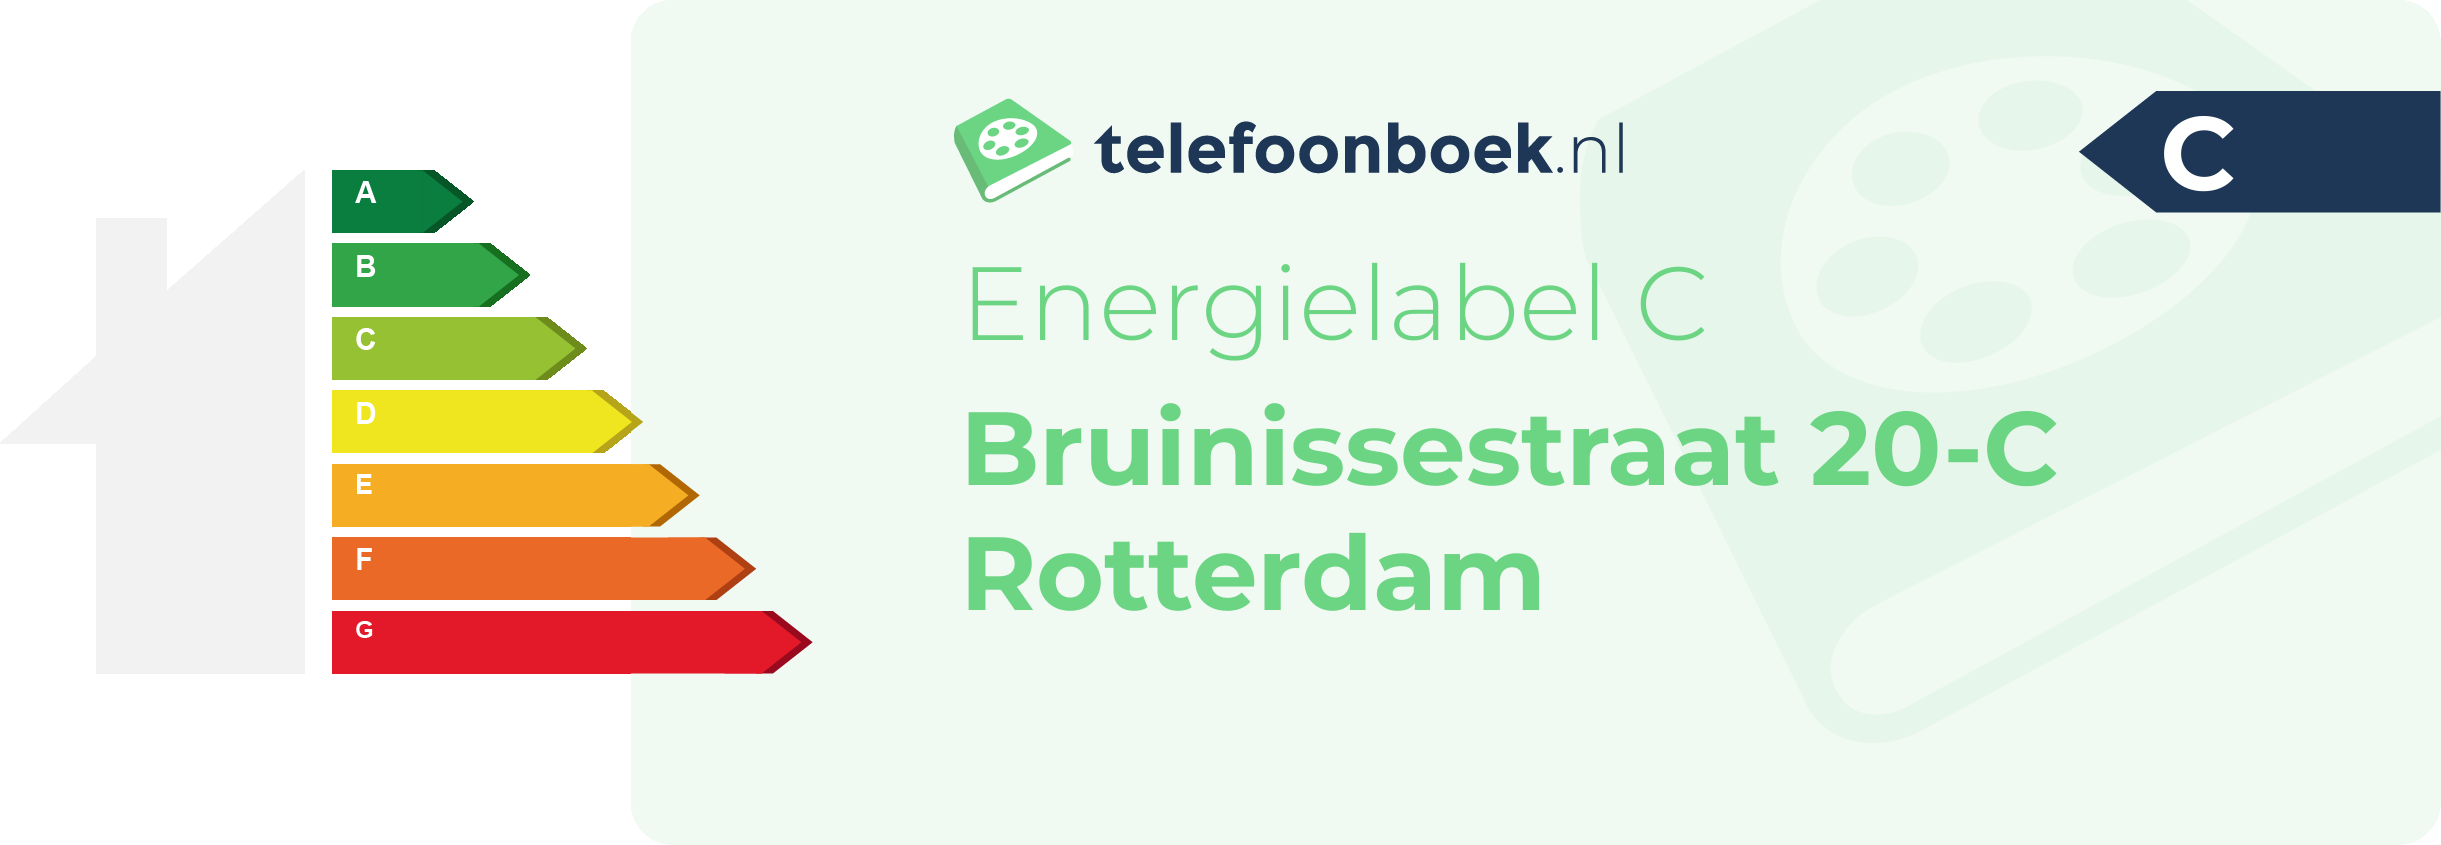 Energielabel Bruinissestraat 20-C Rotterdam